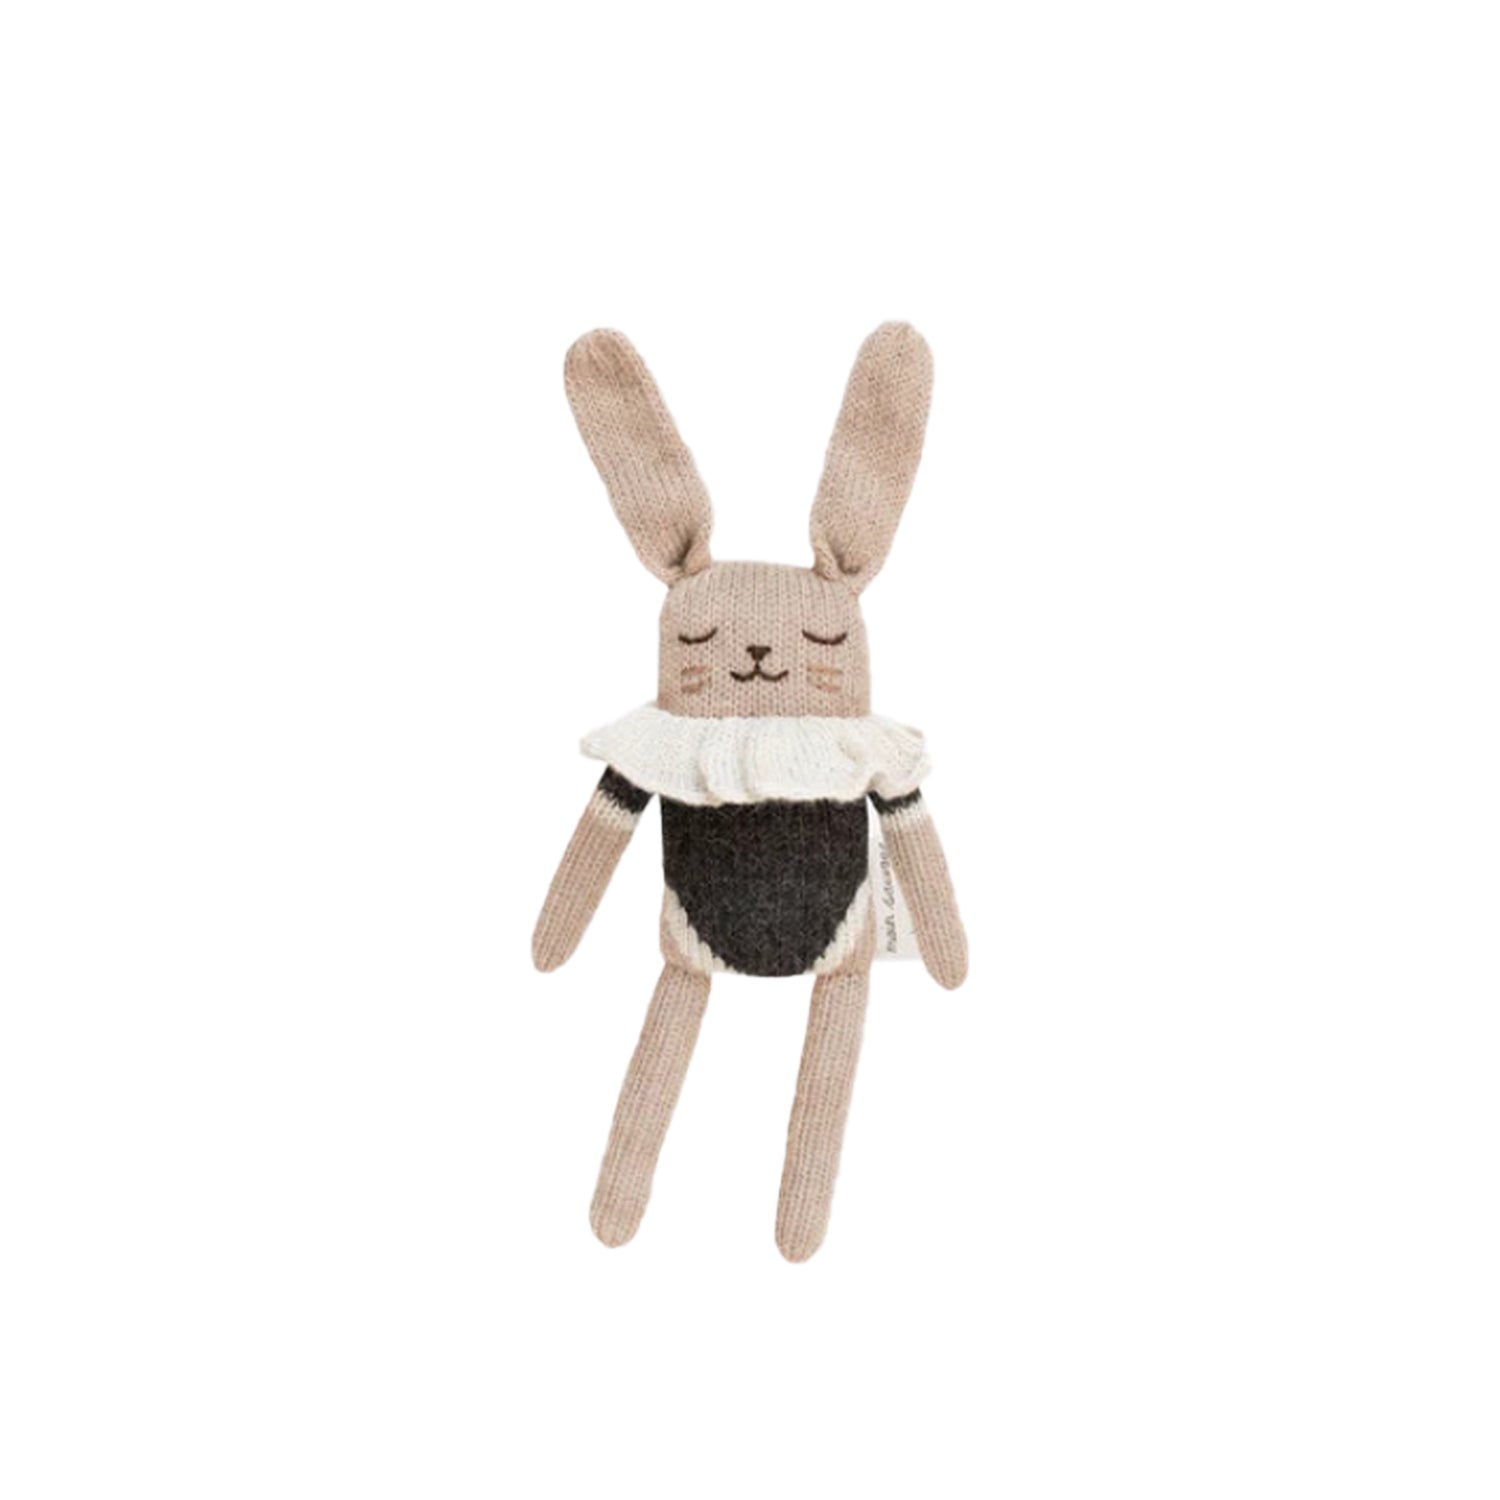 Bunny Soft Toy - Black Check